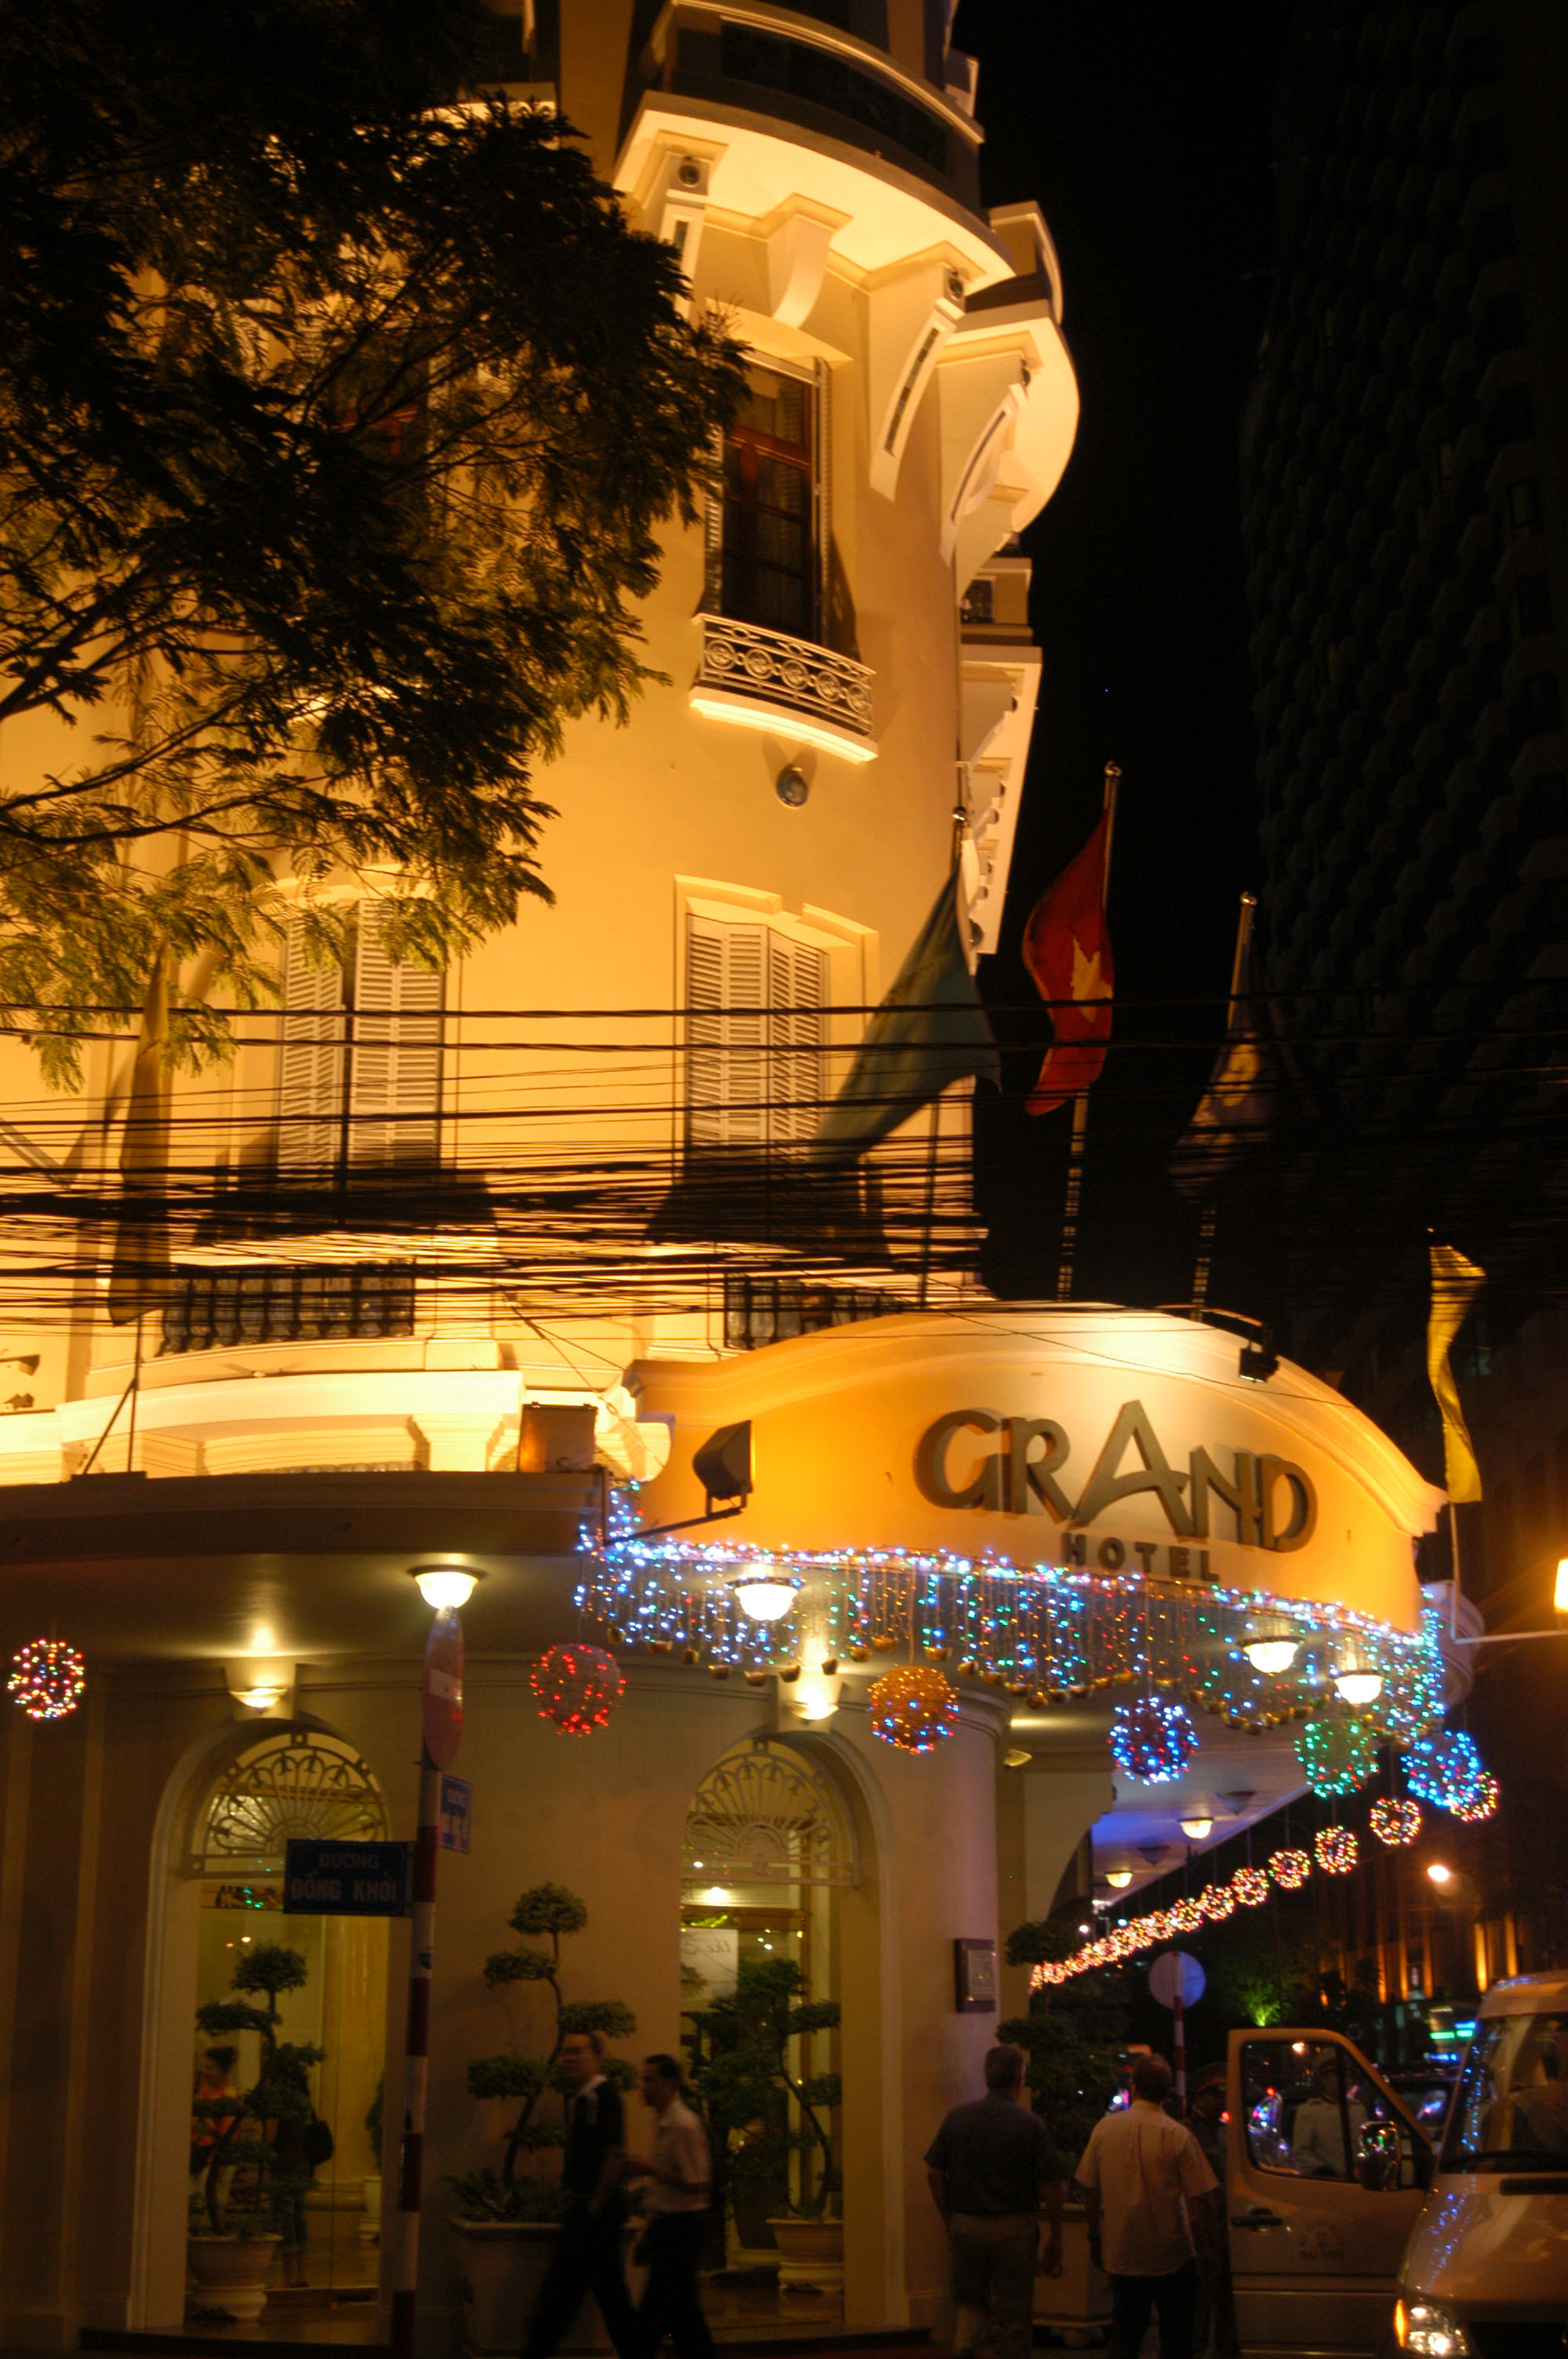 Vietnam Ho Chi Minh City Grand Hotel Saigon night life Feb 2009 01